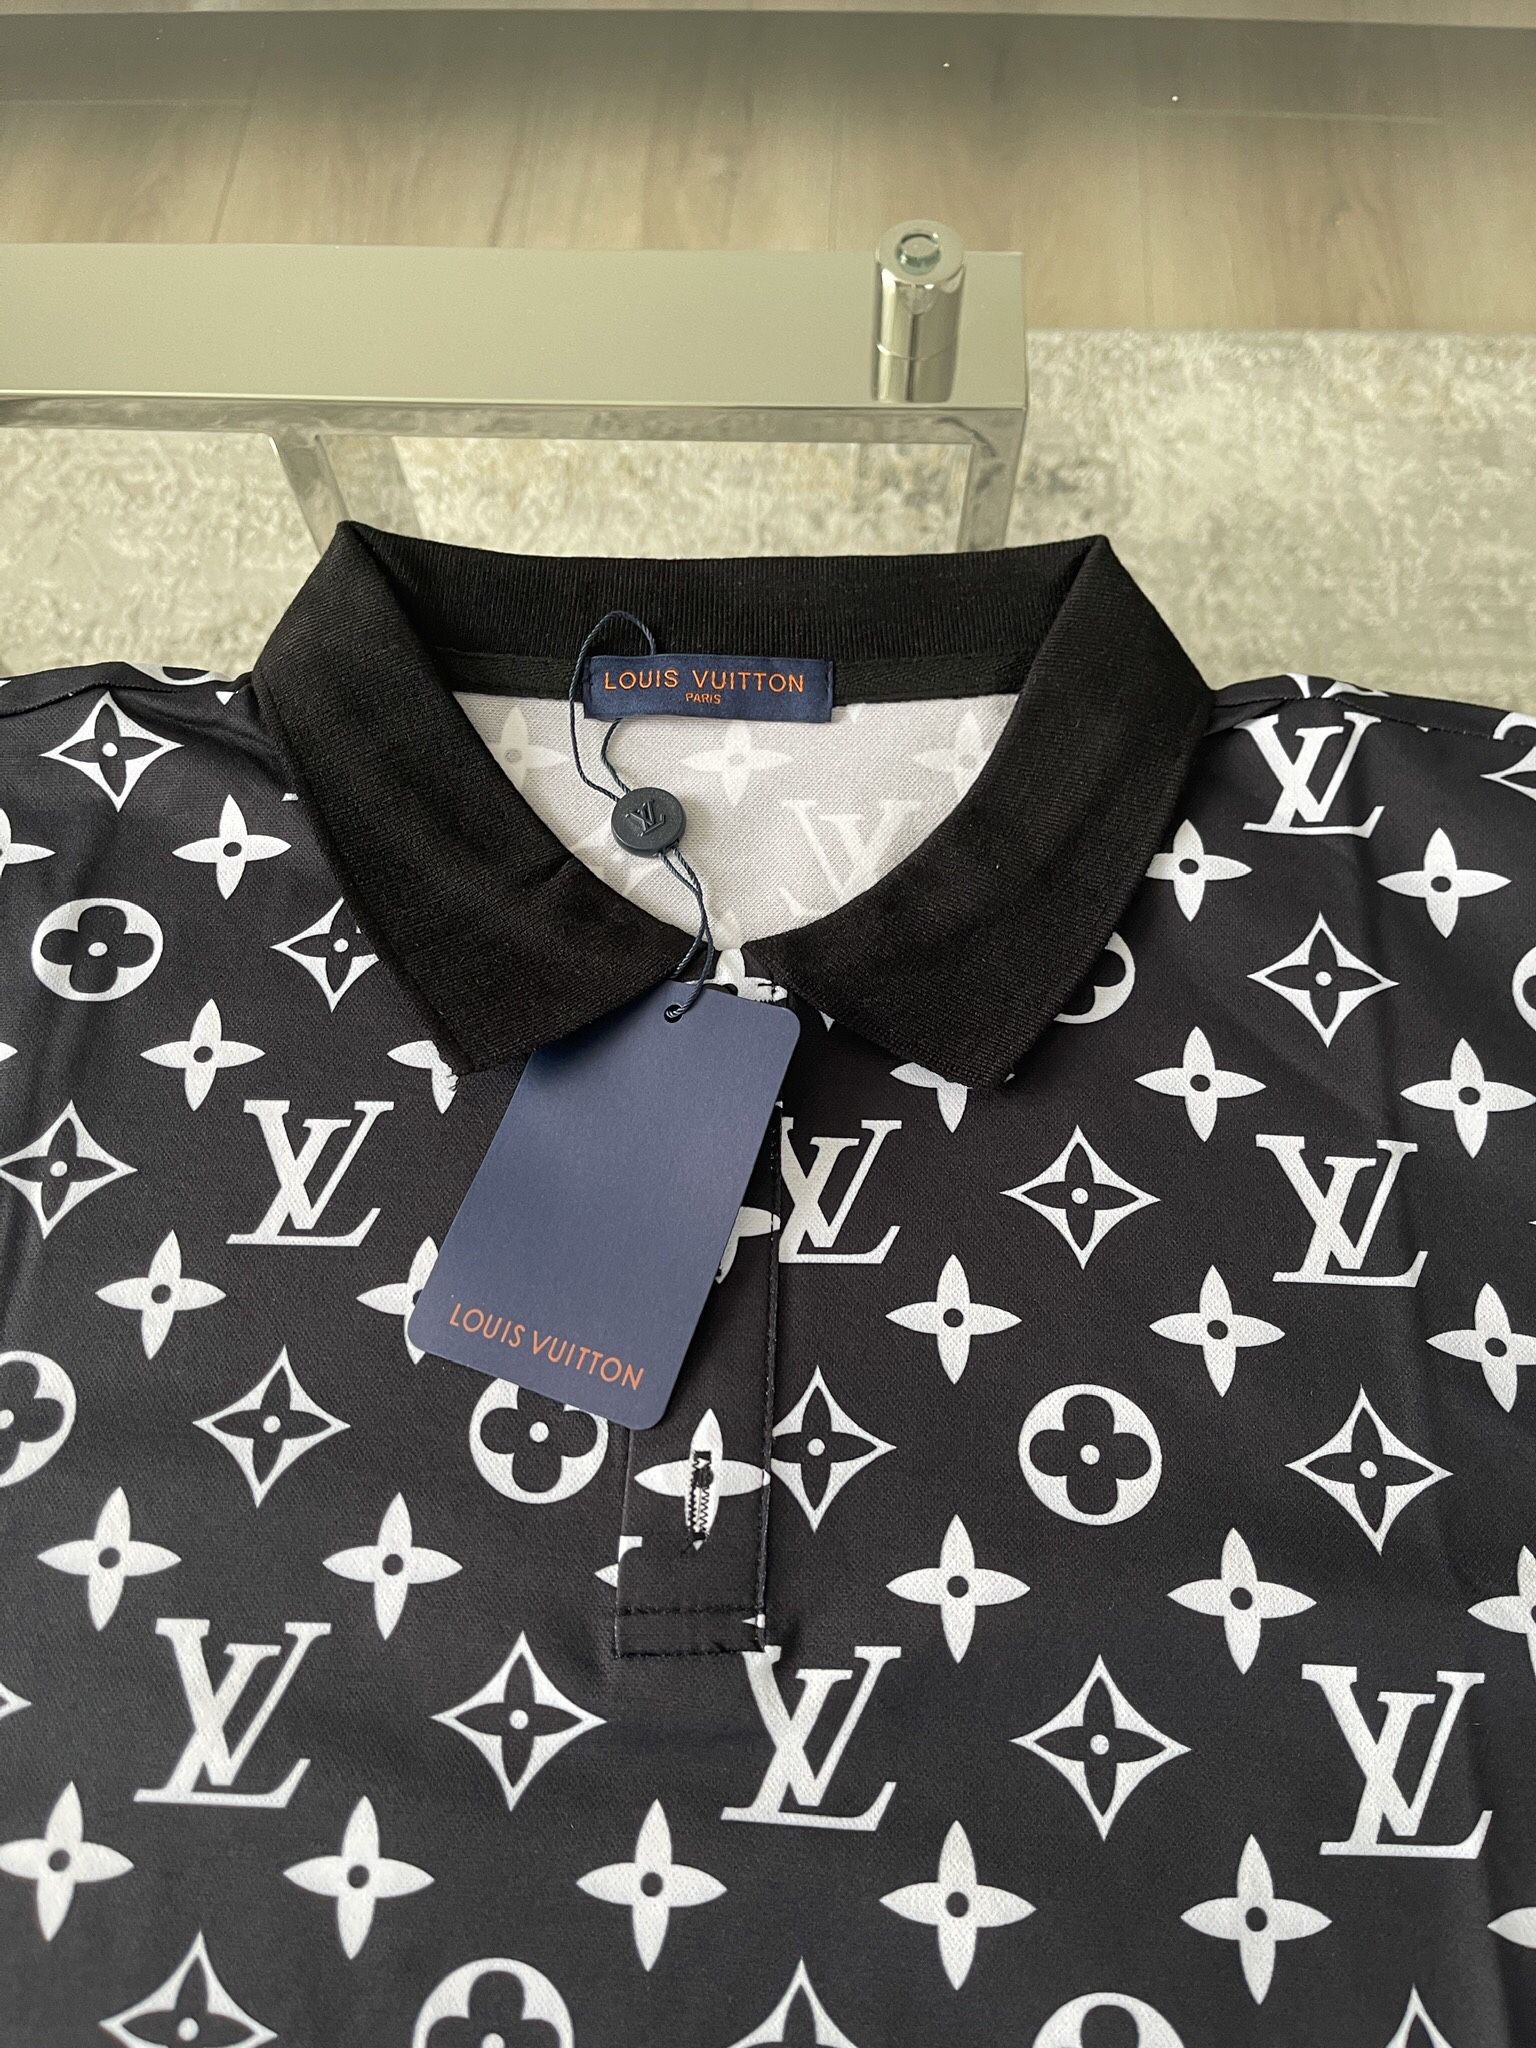 Lv Louis Vuitton Shirt Men Size Large Black for Sale in Medley, FL - OfferUp